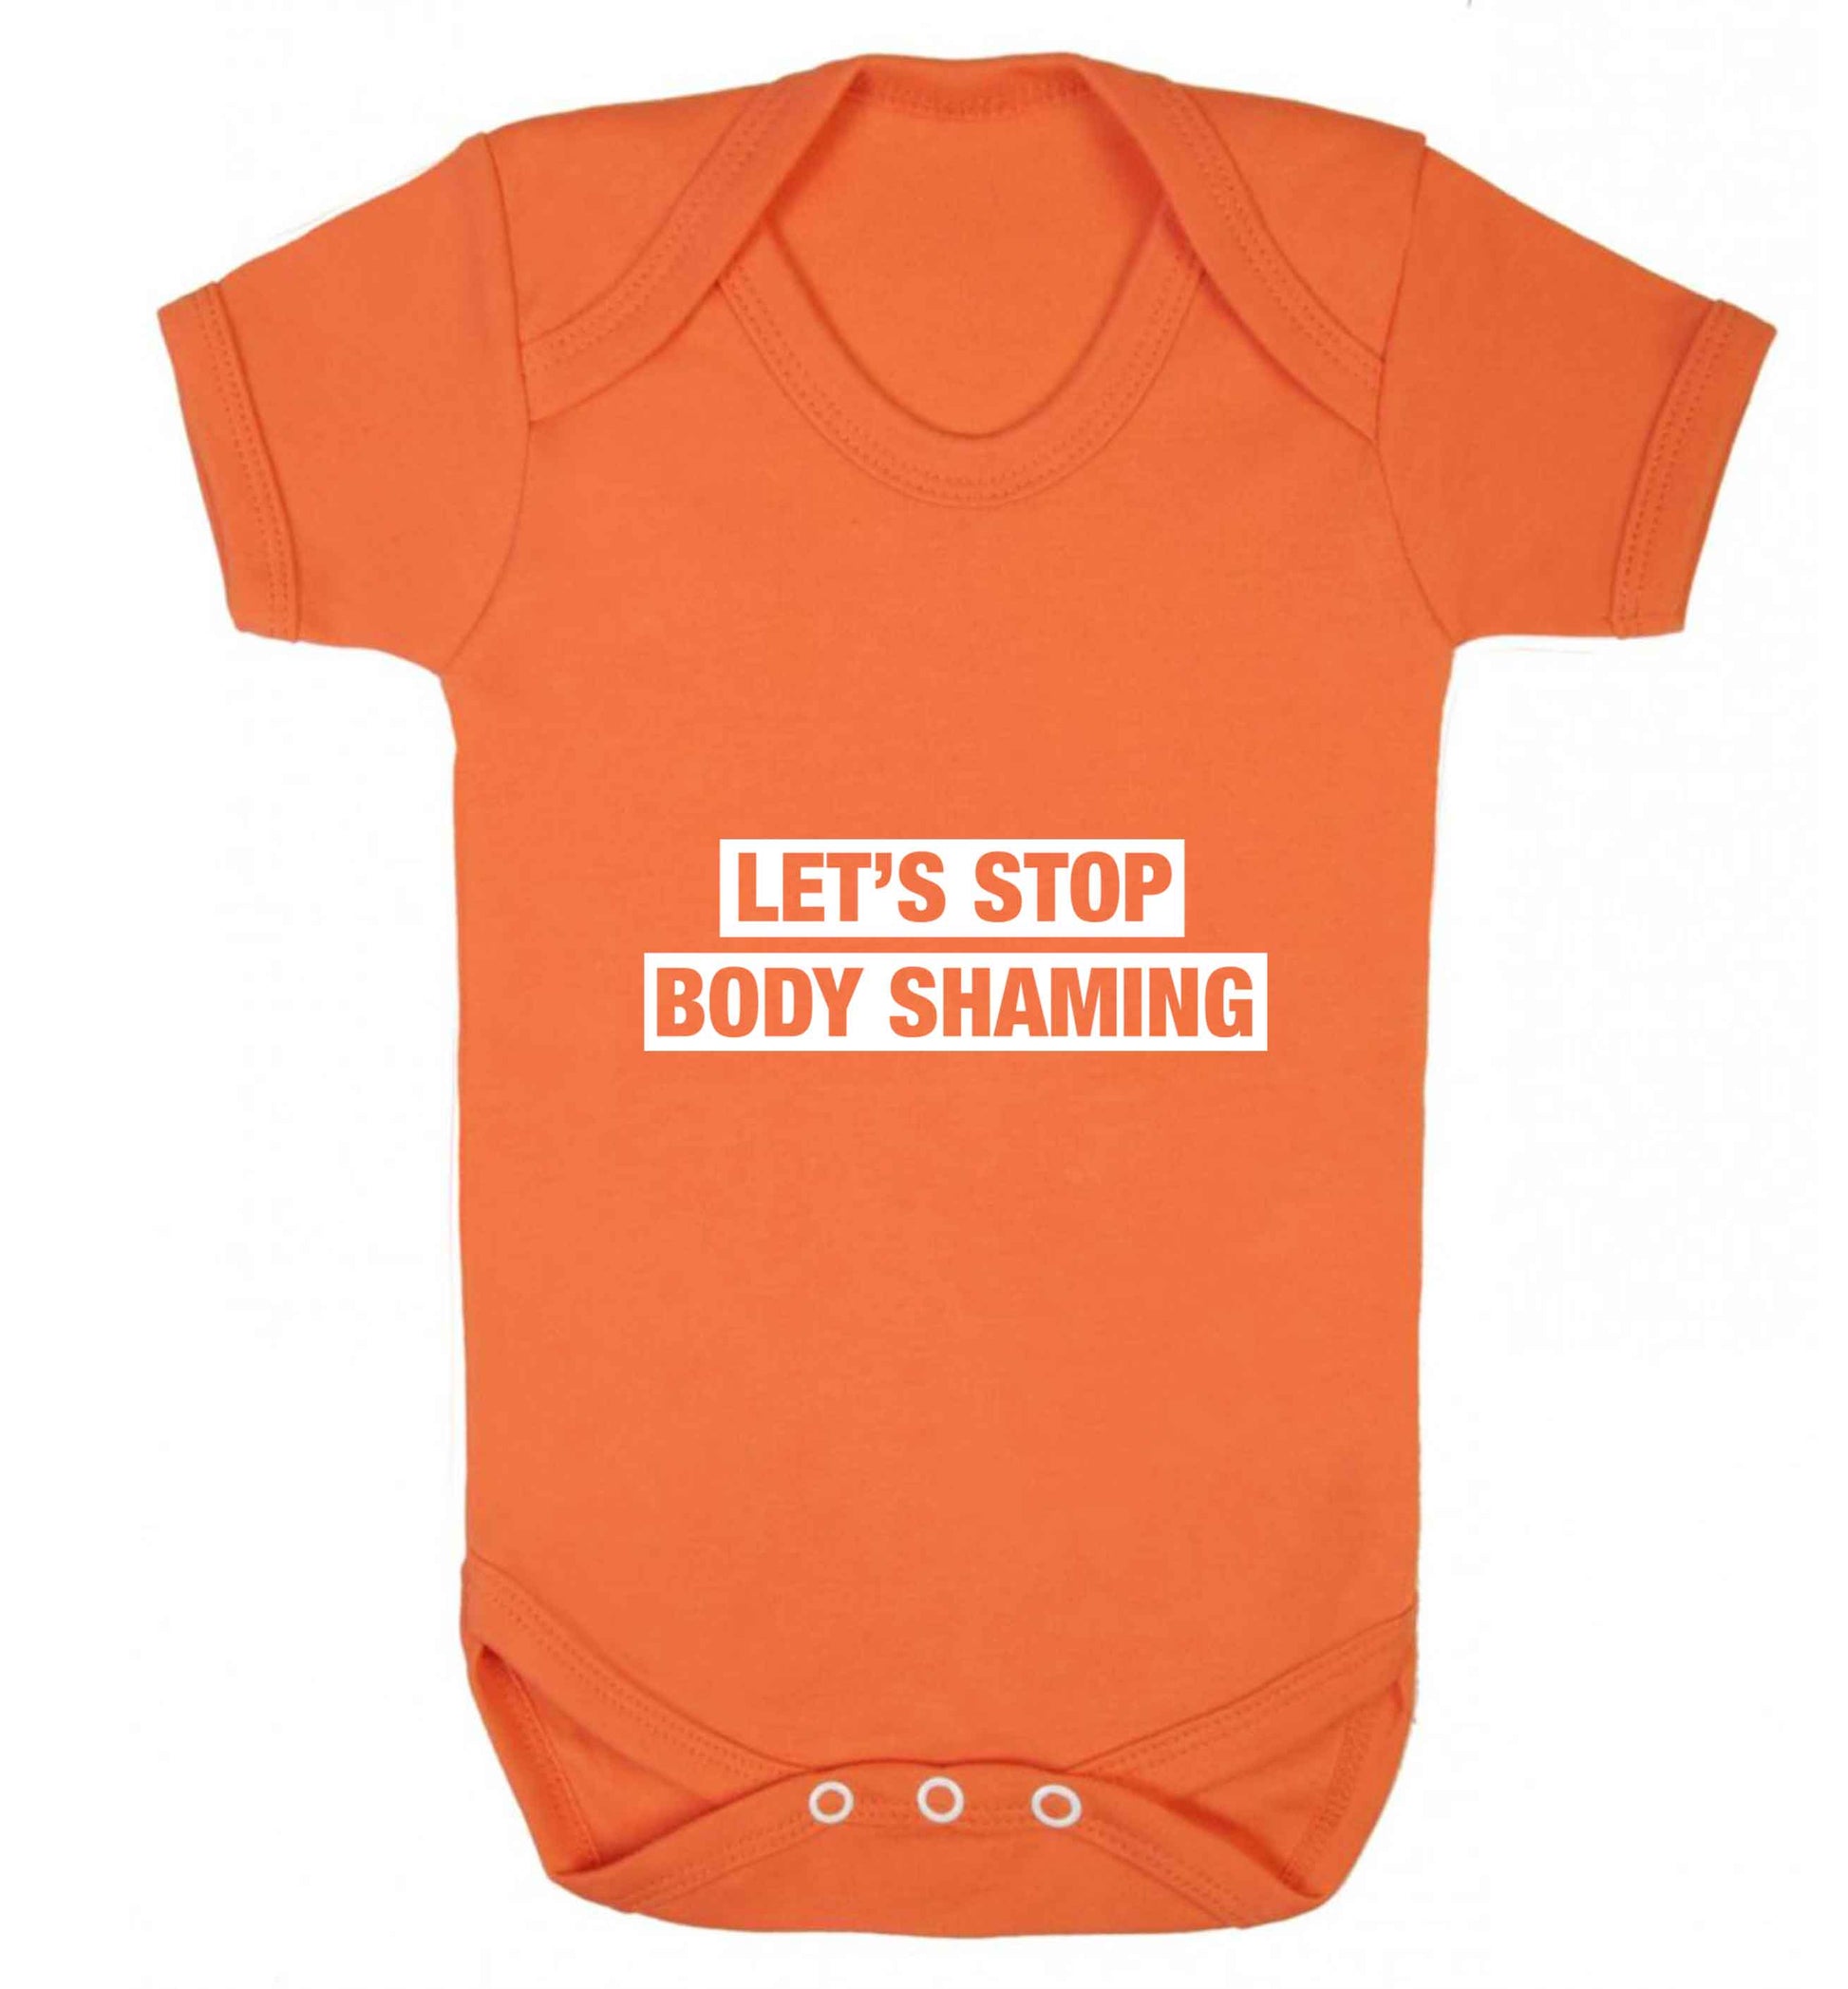 Let's stop body shaming baby vest orange 18-24 months